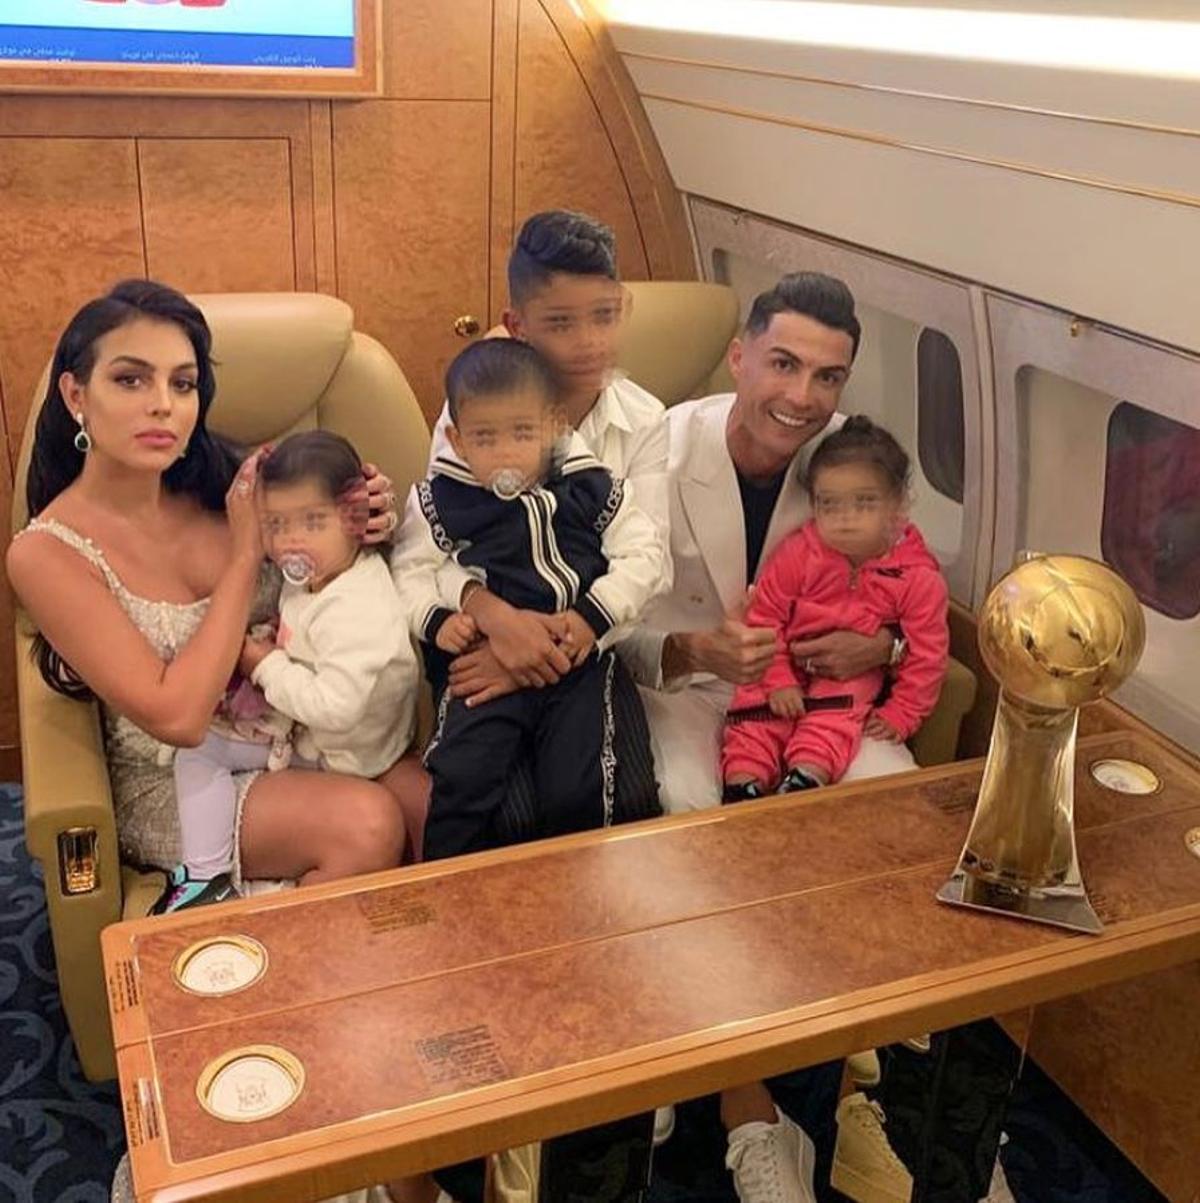 La familia de Cristiano Ronaldo de vuelta a casa tras recoger su premio en Dubai